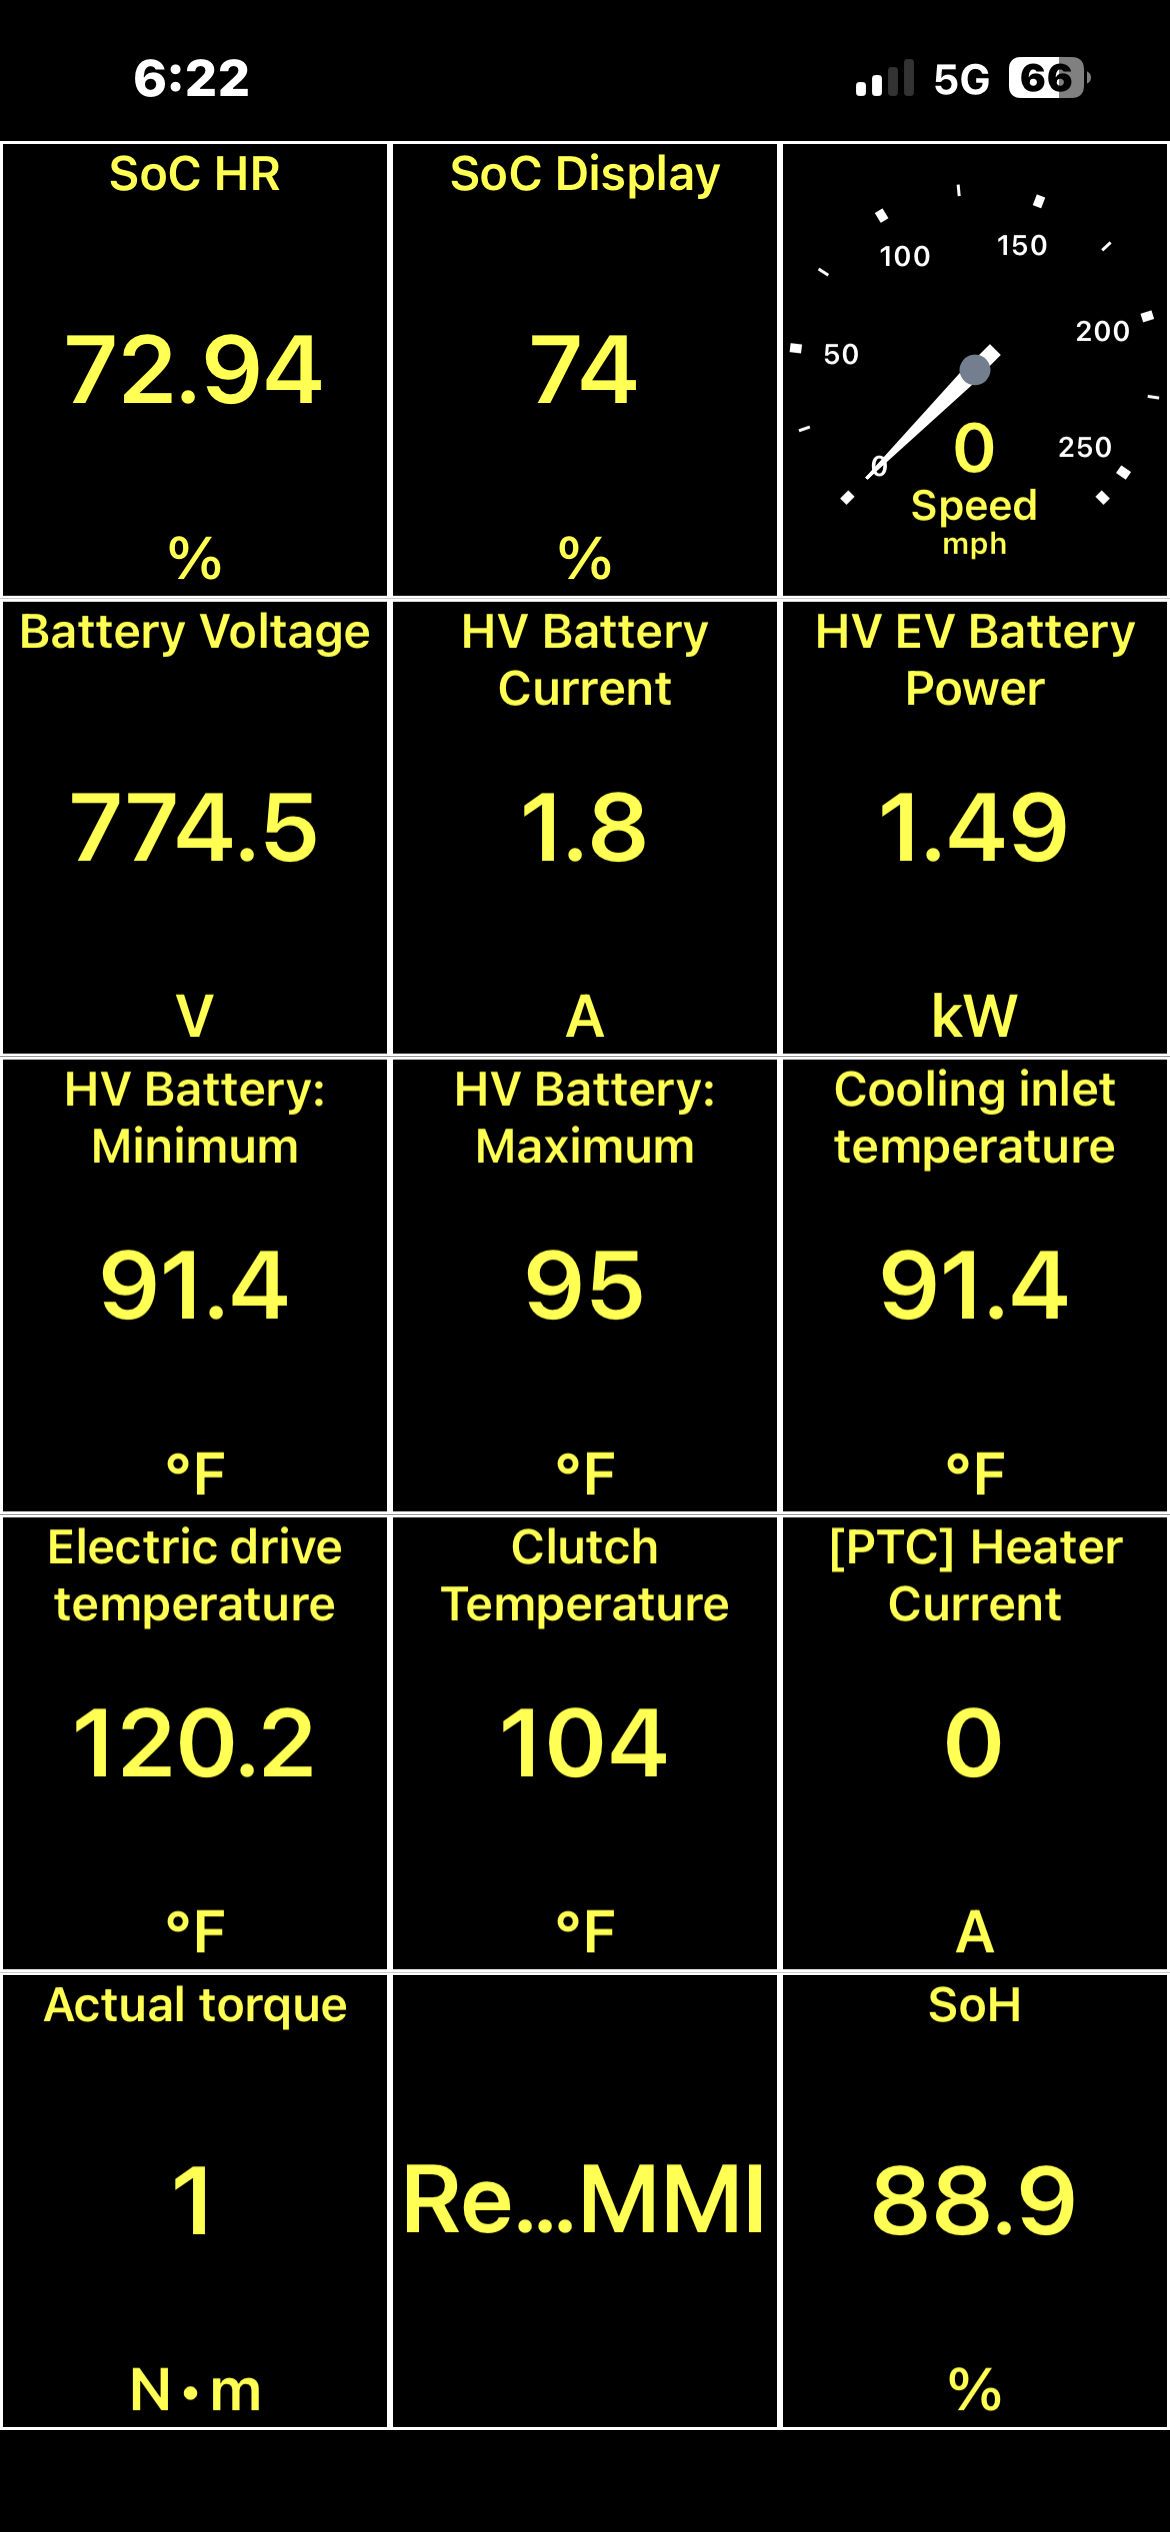 Porsche Taycan Baseline for HV Battery SoH Performance IMG_2213.PNG